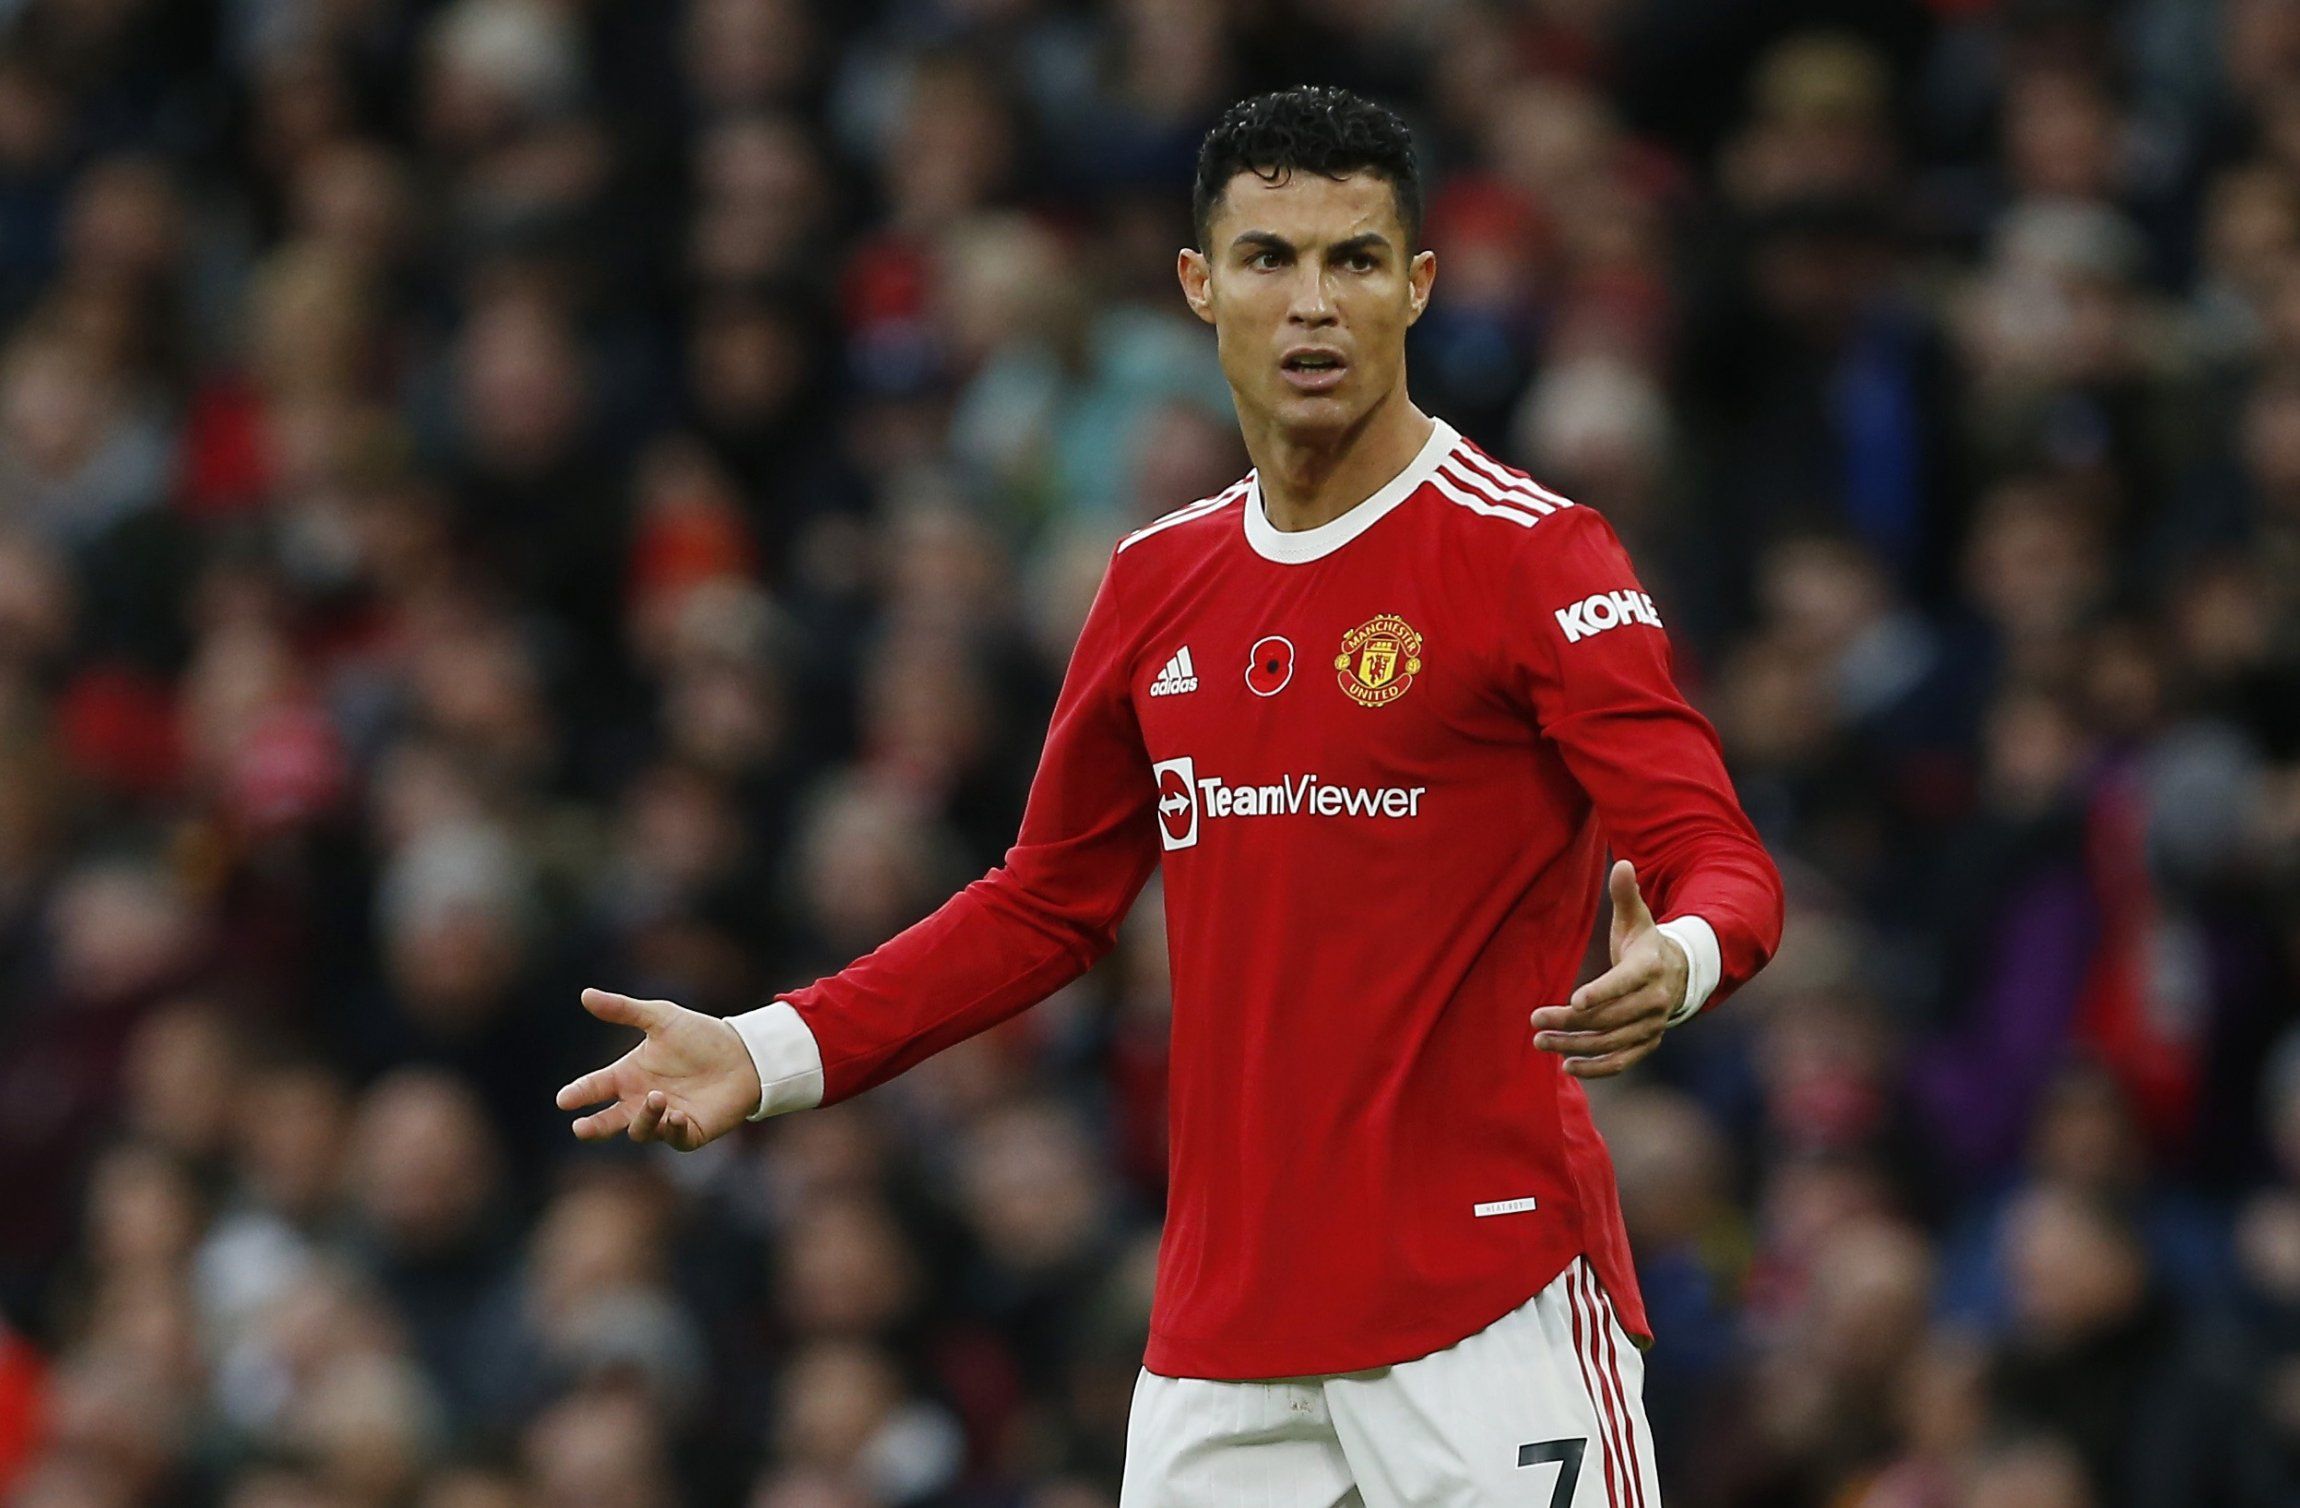 Ronaldo's MUFC future hangs in the balance